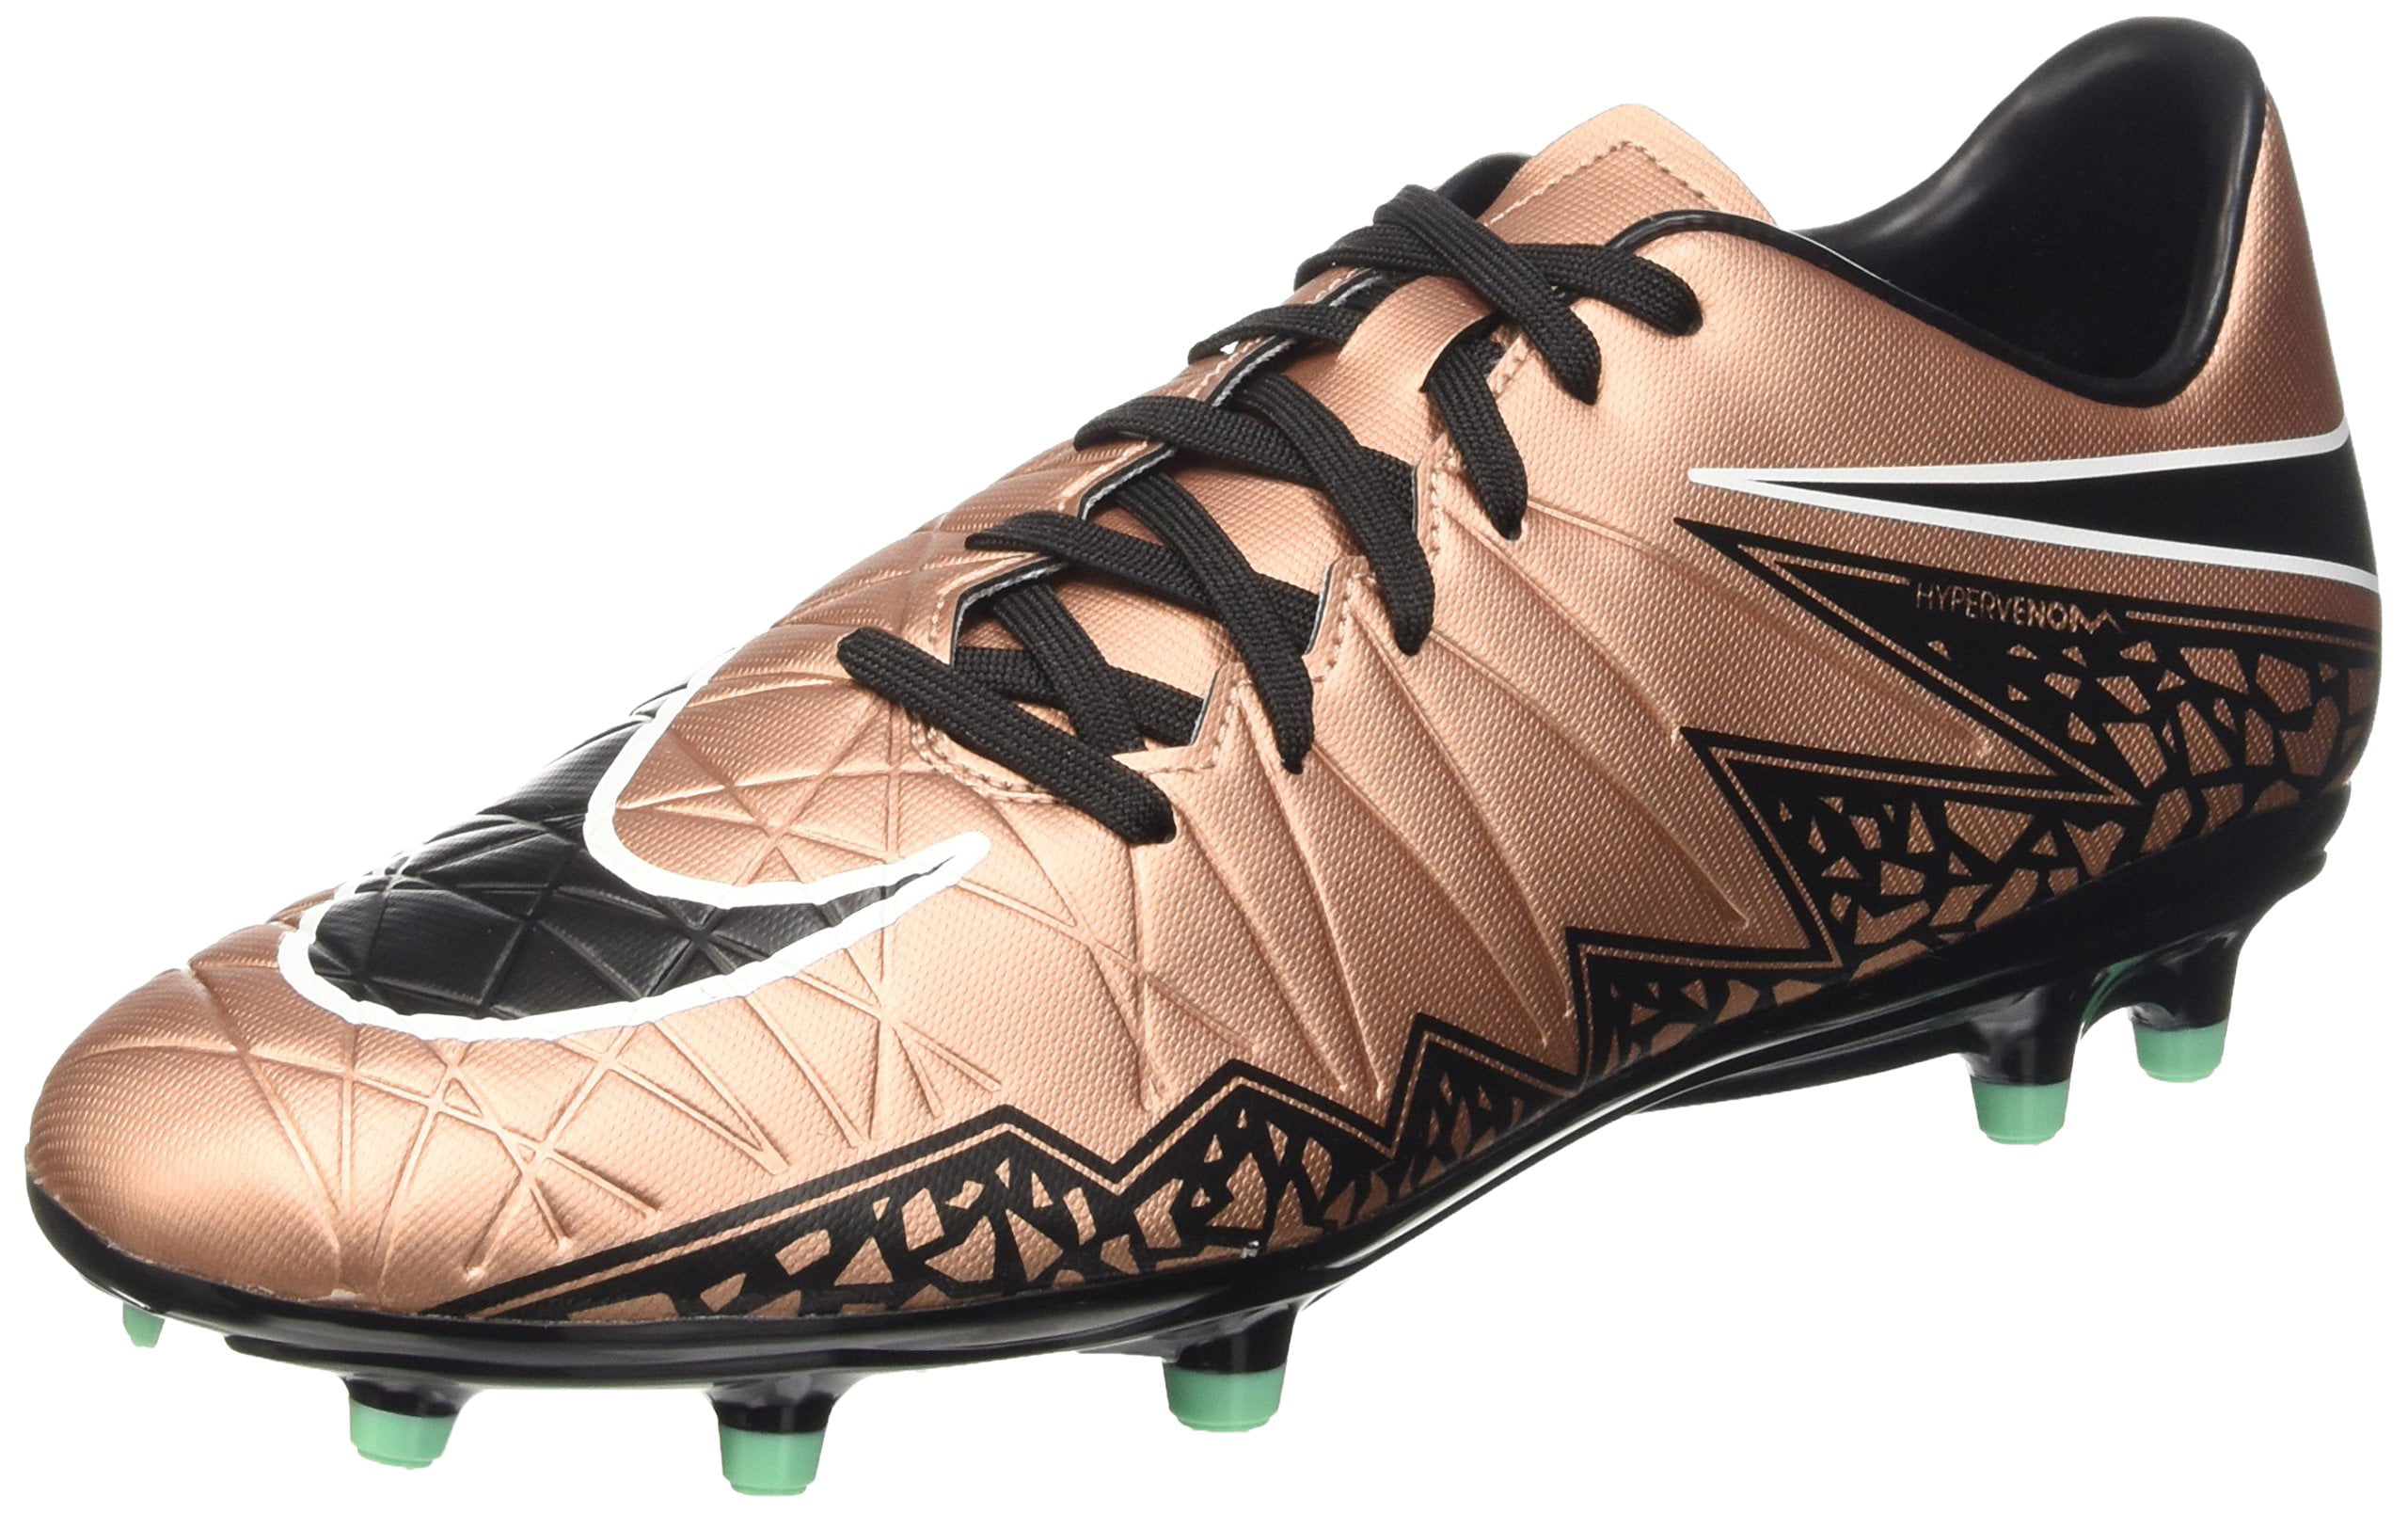 Nike Hypervenom Phelon II FG, Men's Football Boots, Grey ...